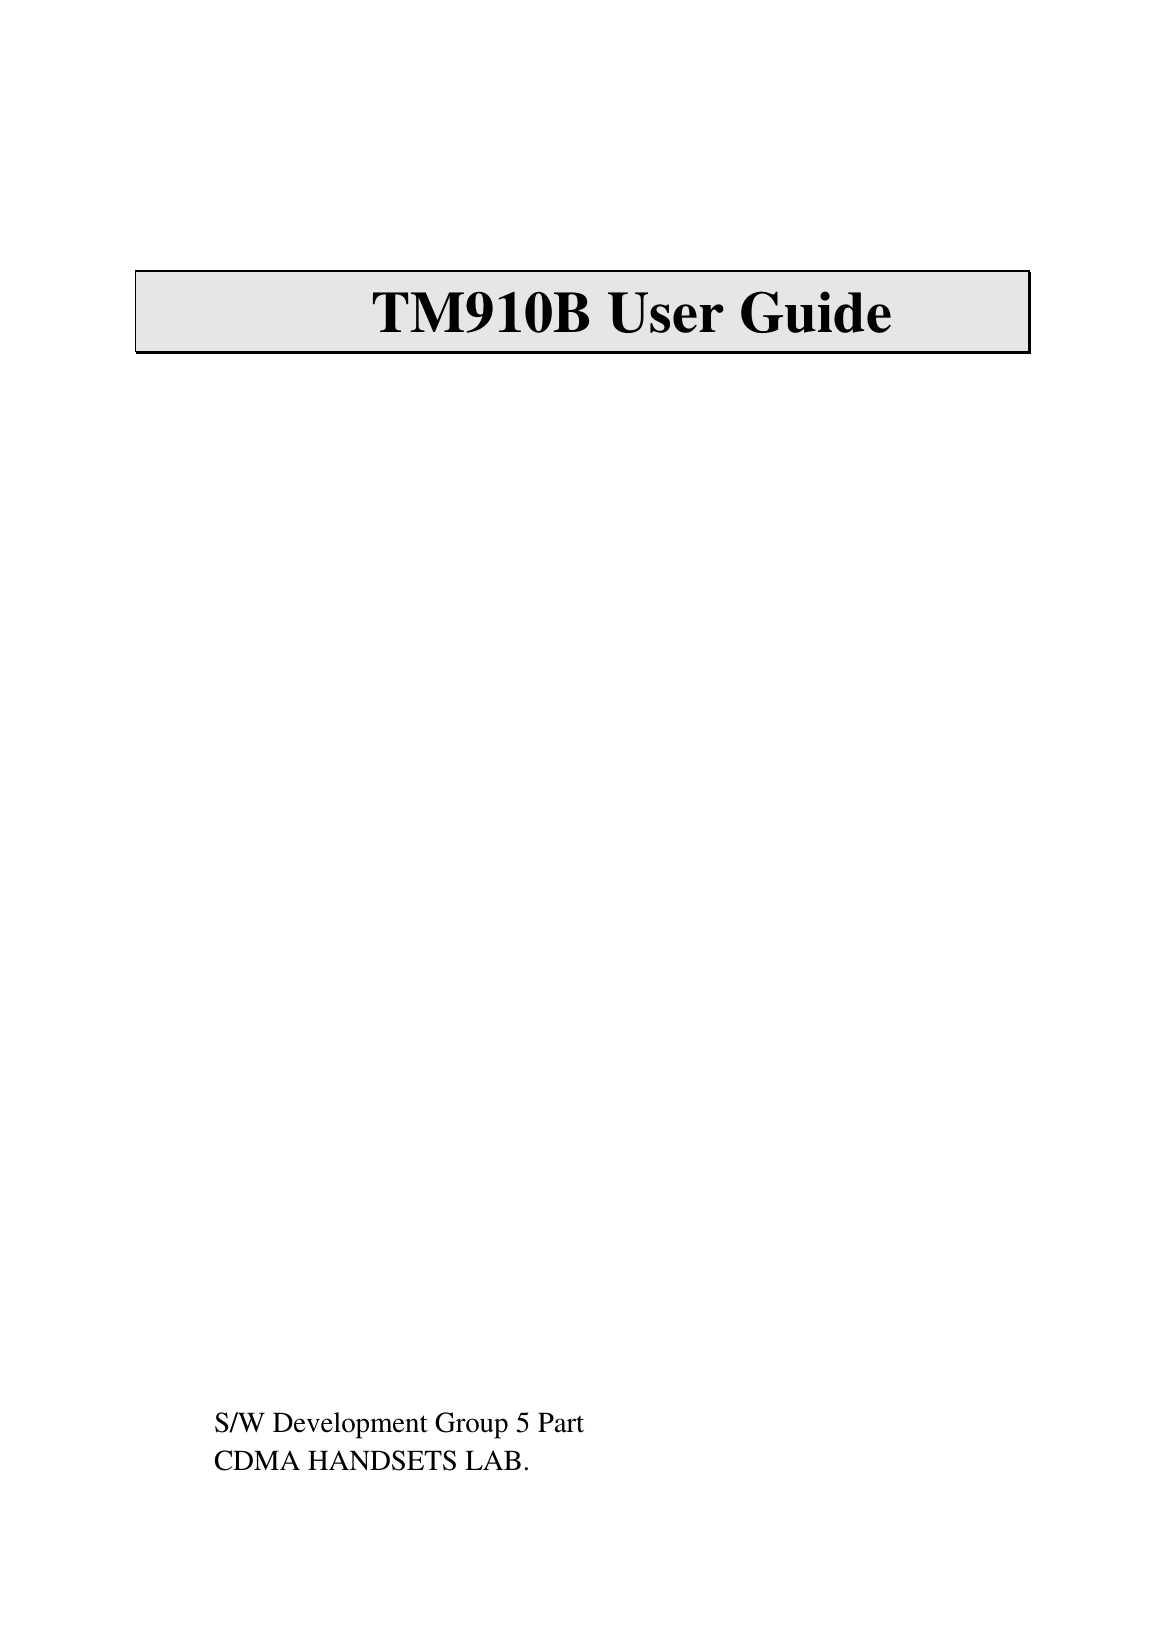    TM910B User Guide               S/W Development Group 5 Part CDMA HANDSETS LAB. 